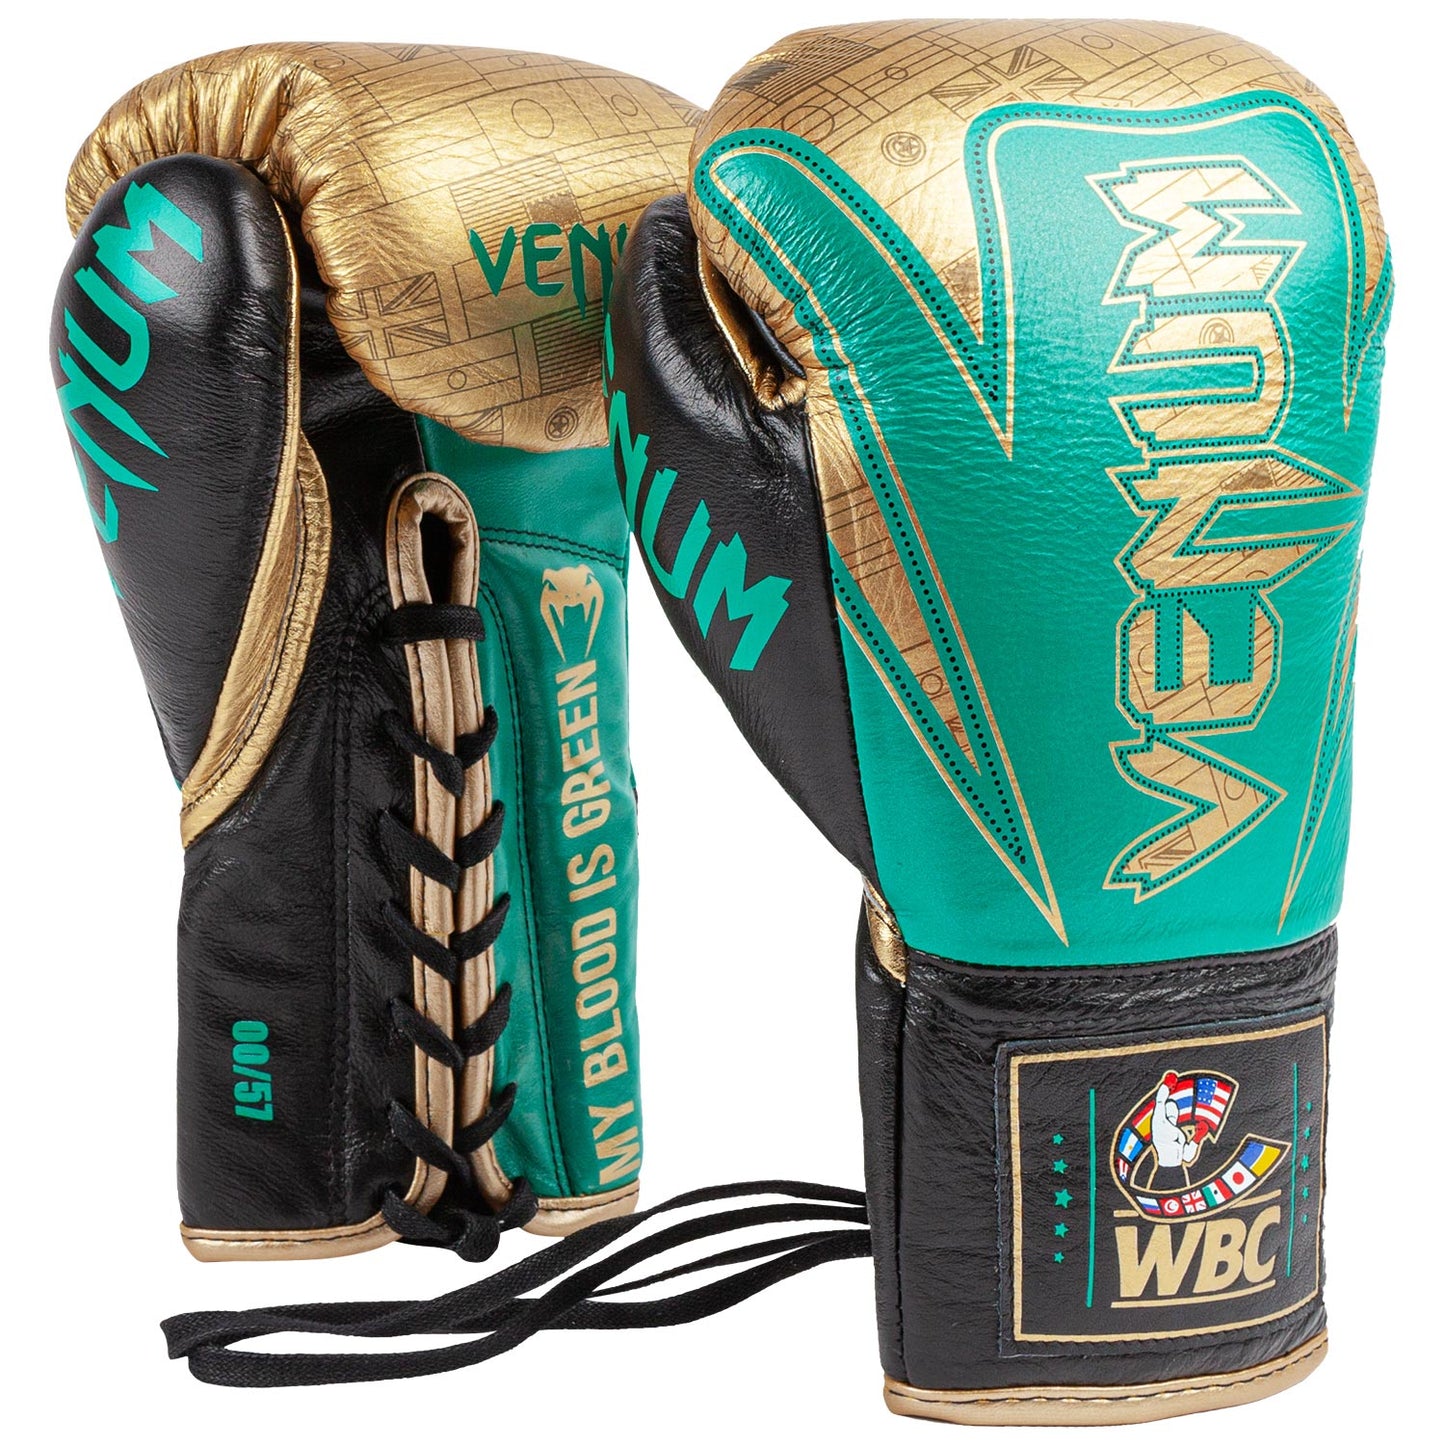 Venum Hammer professionella boxhandskar klittenband  - WBC Limited Edition